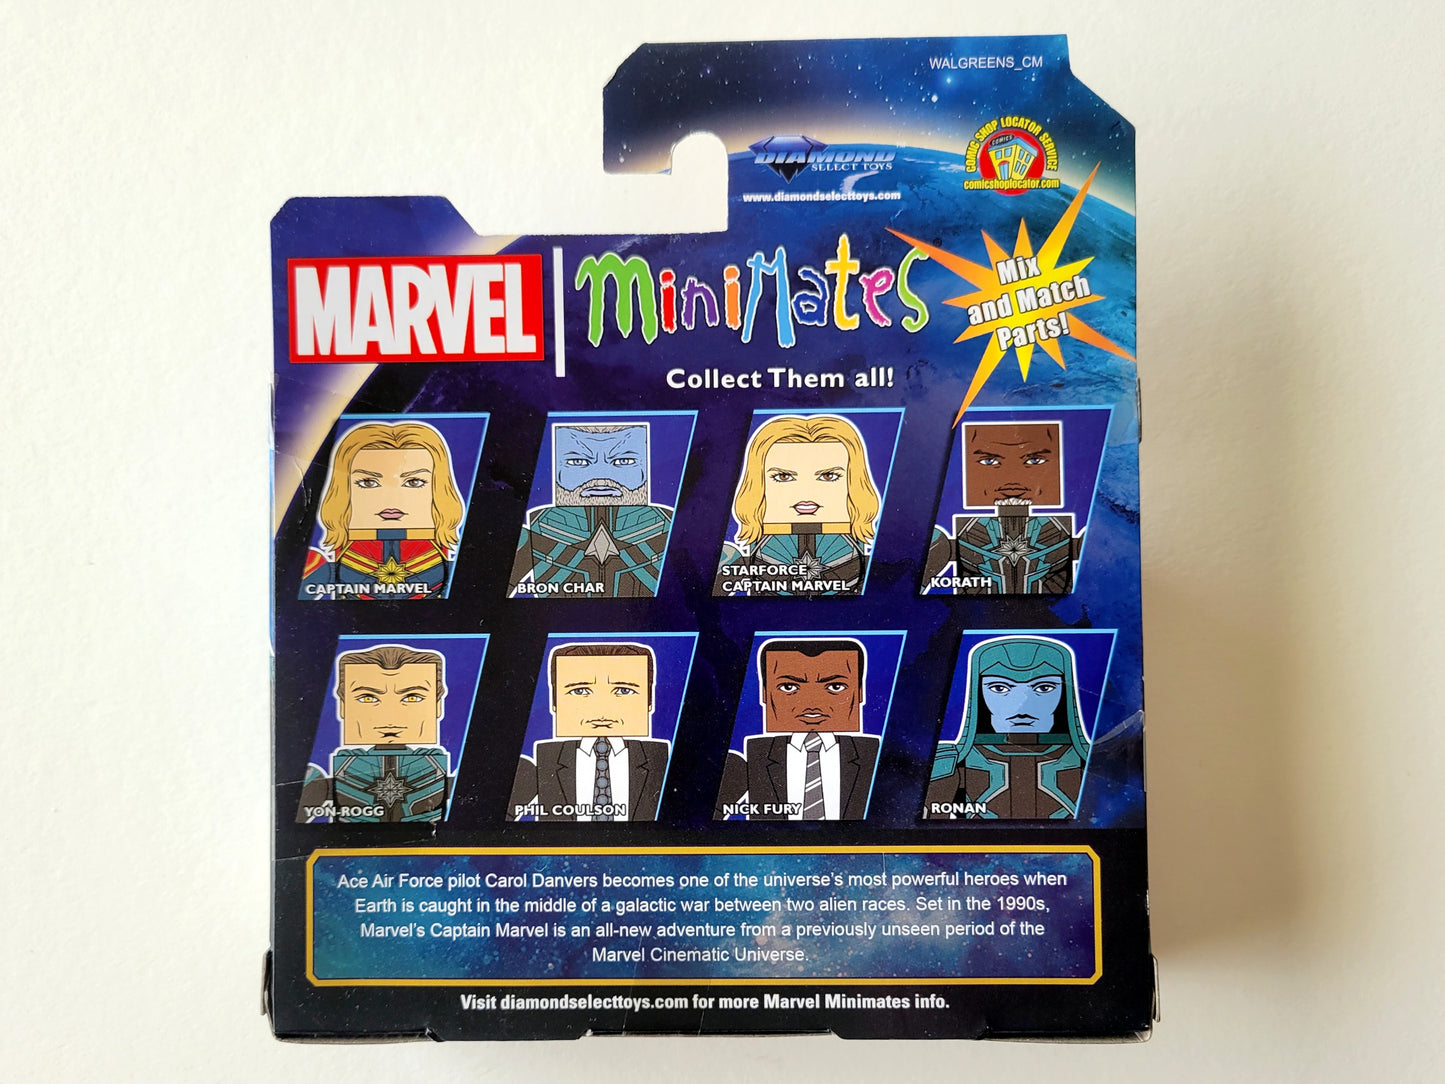 Captain Marvel Minimates Walgreens Exclusive Nick Fury & Ronan